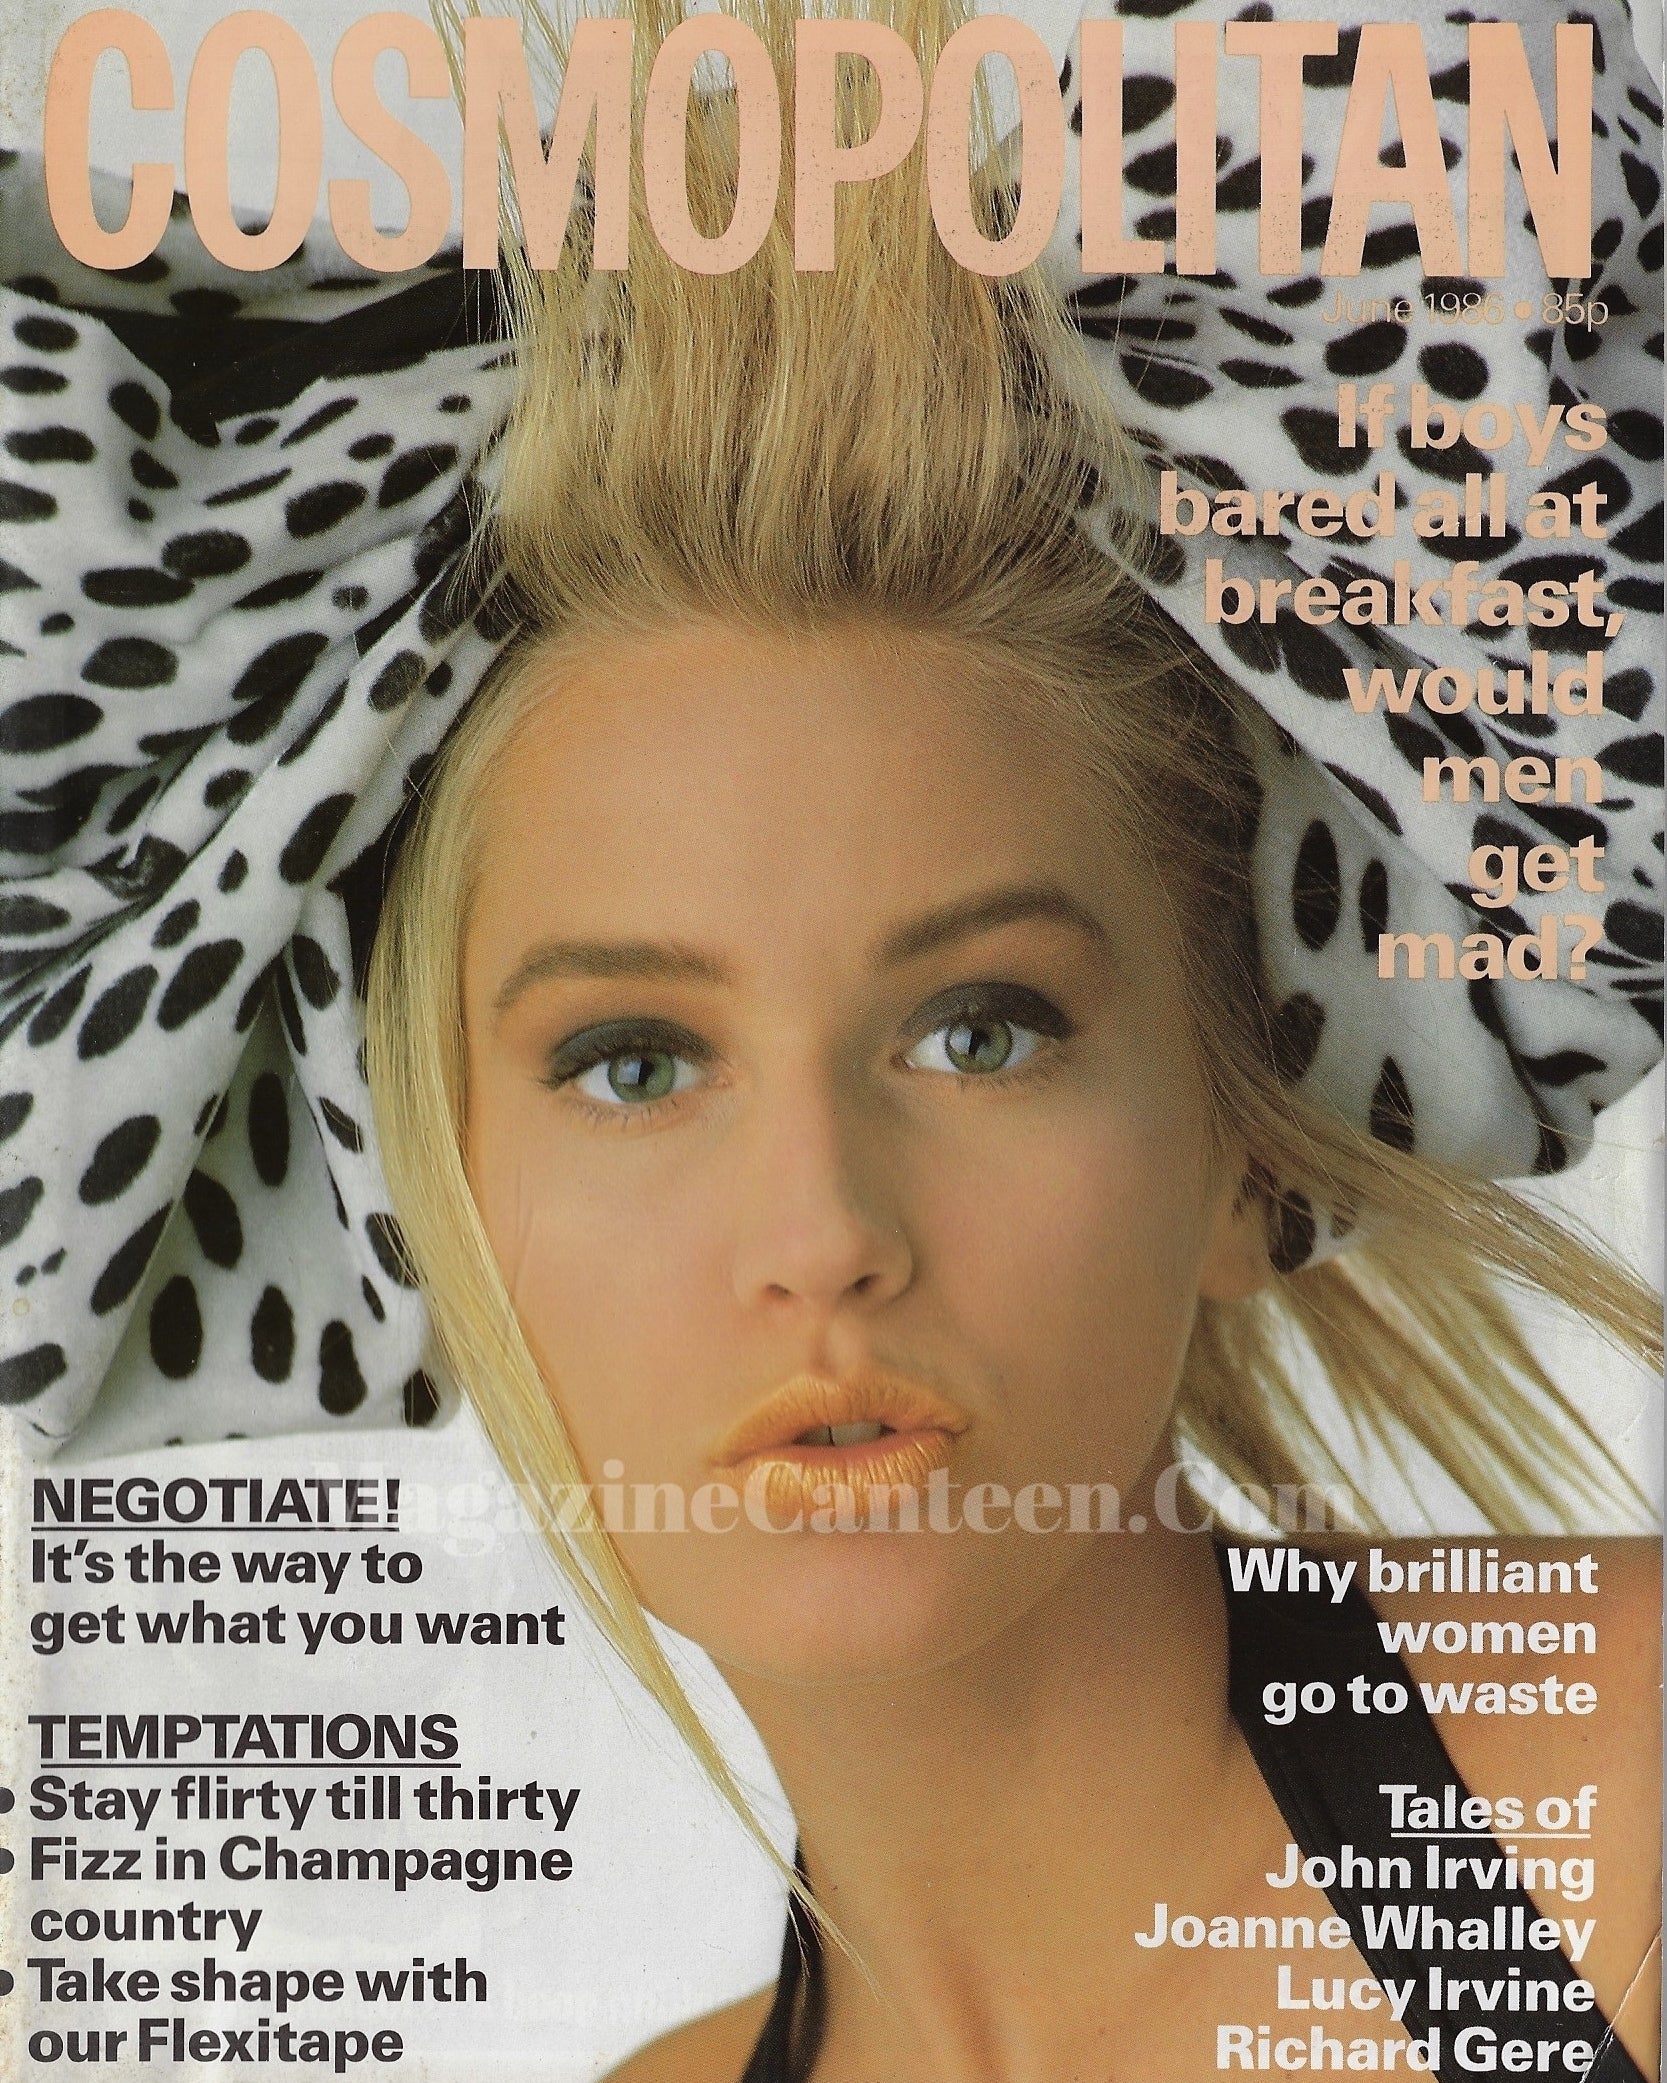 Cosmopolitan Magazine - Ashley Ines De La Fressange